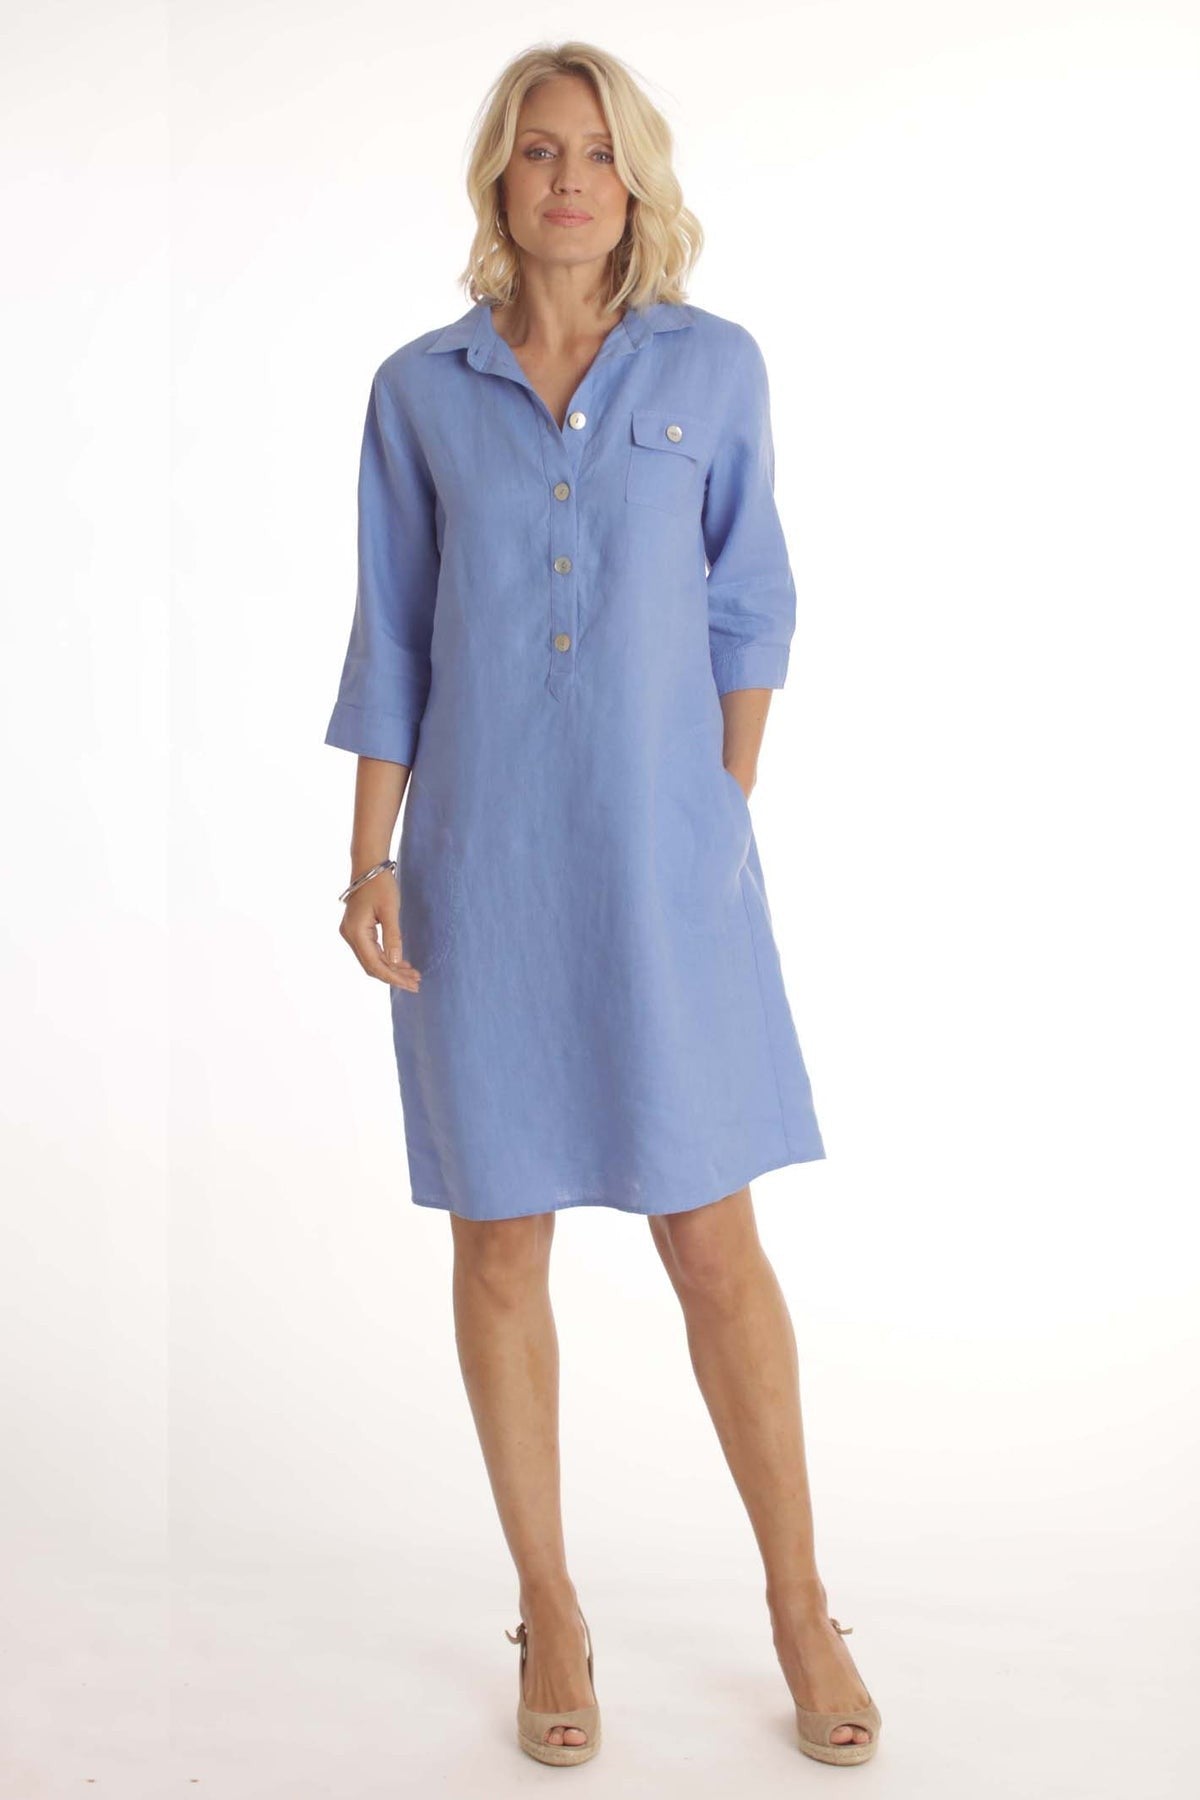 Pomodoro Blue Linen Dress